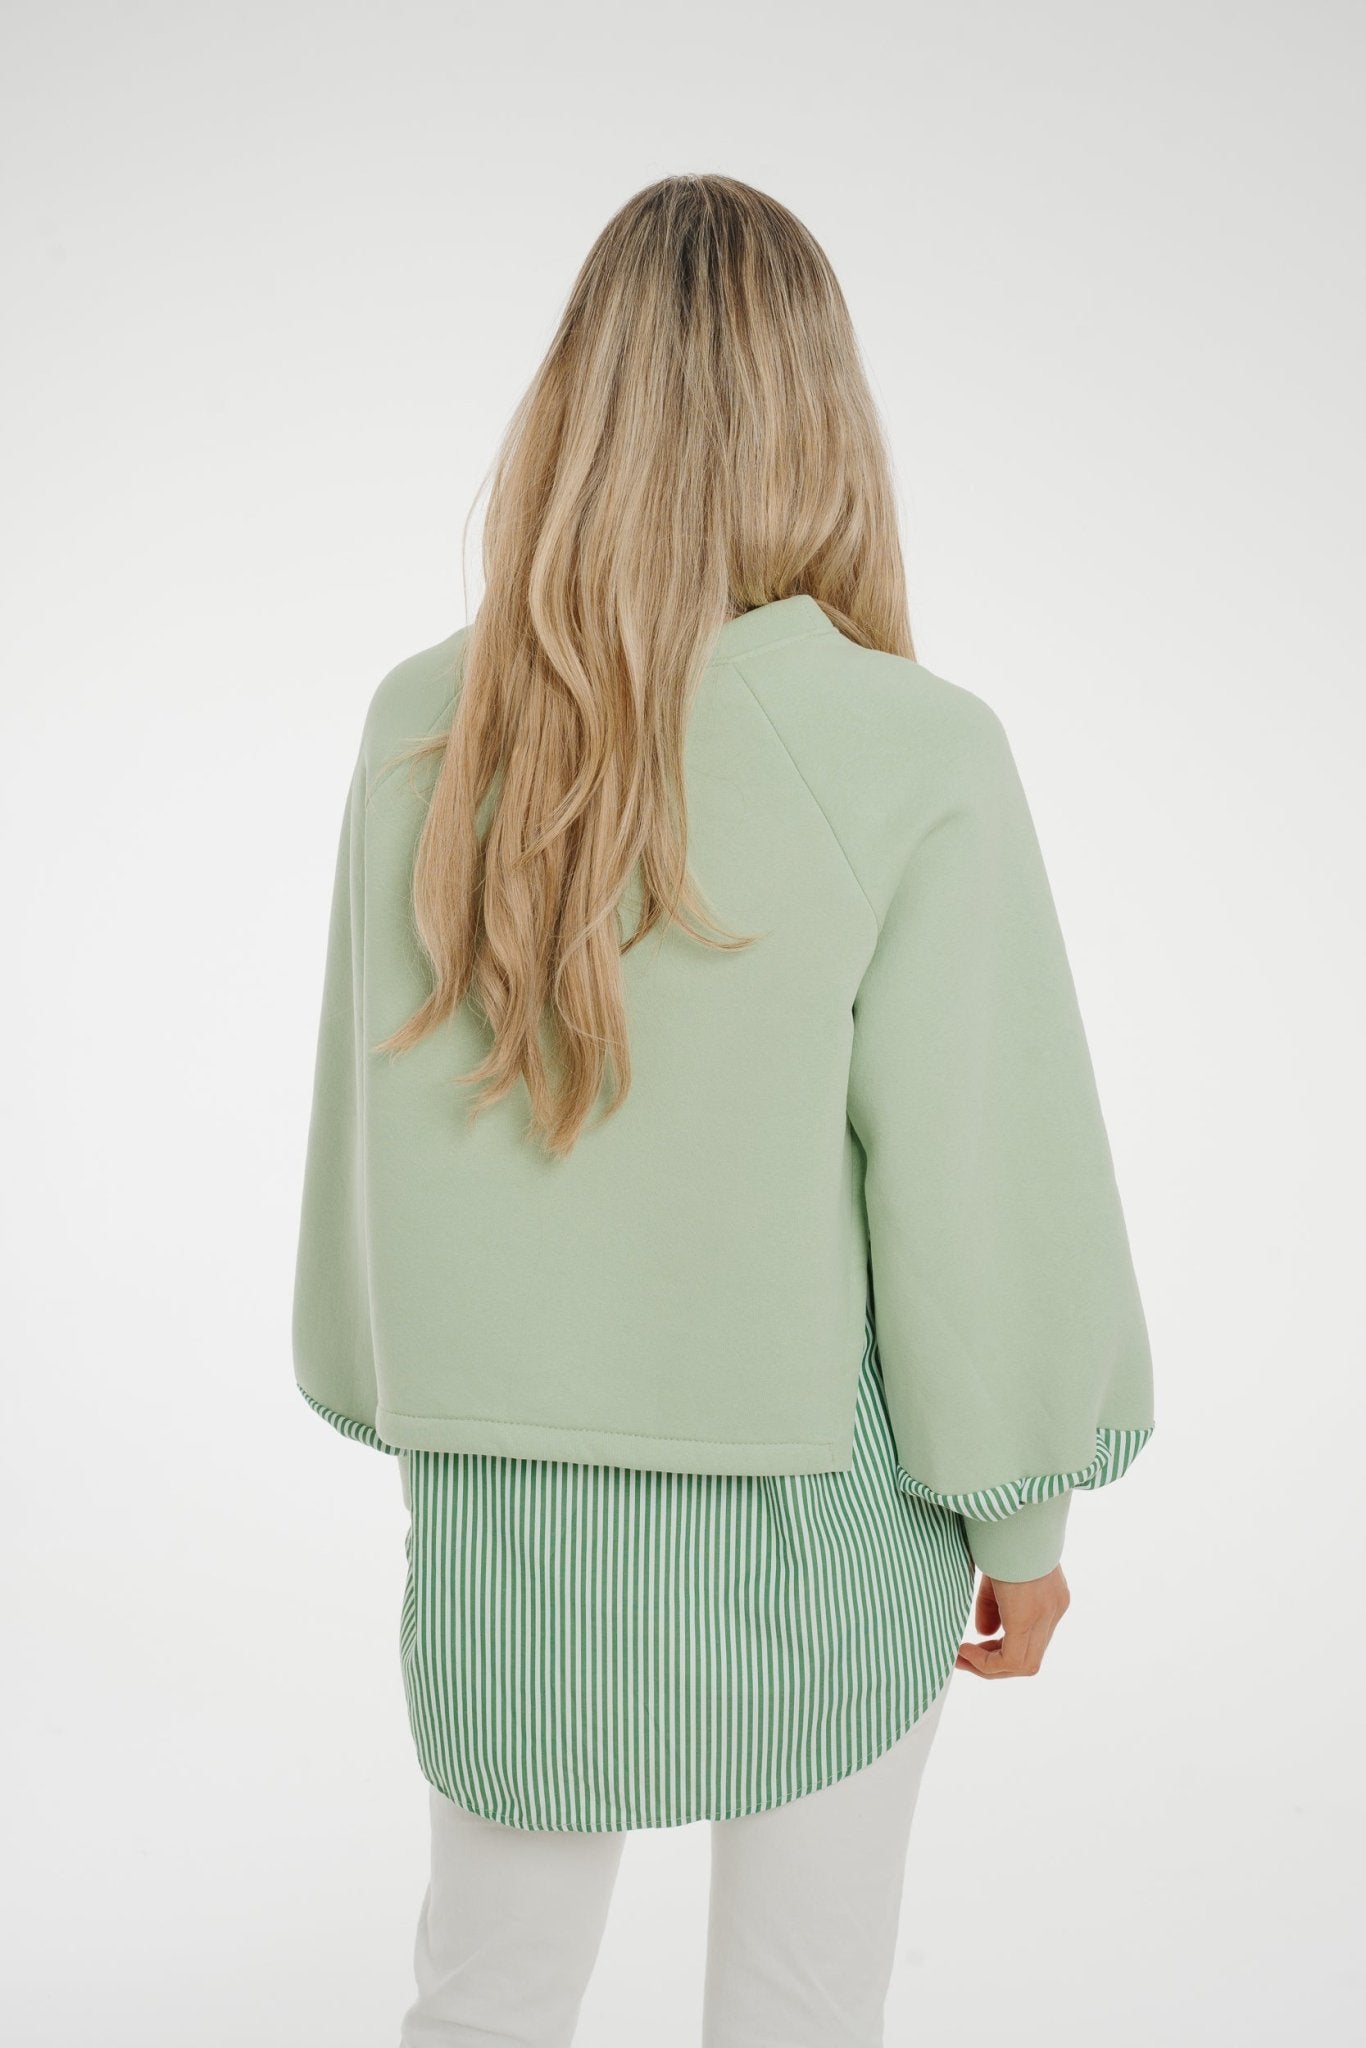 Indie Overlay Sweatshirt In Mint - The Walk in Wardrobe